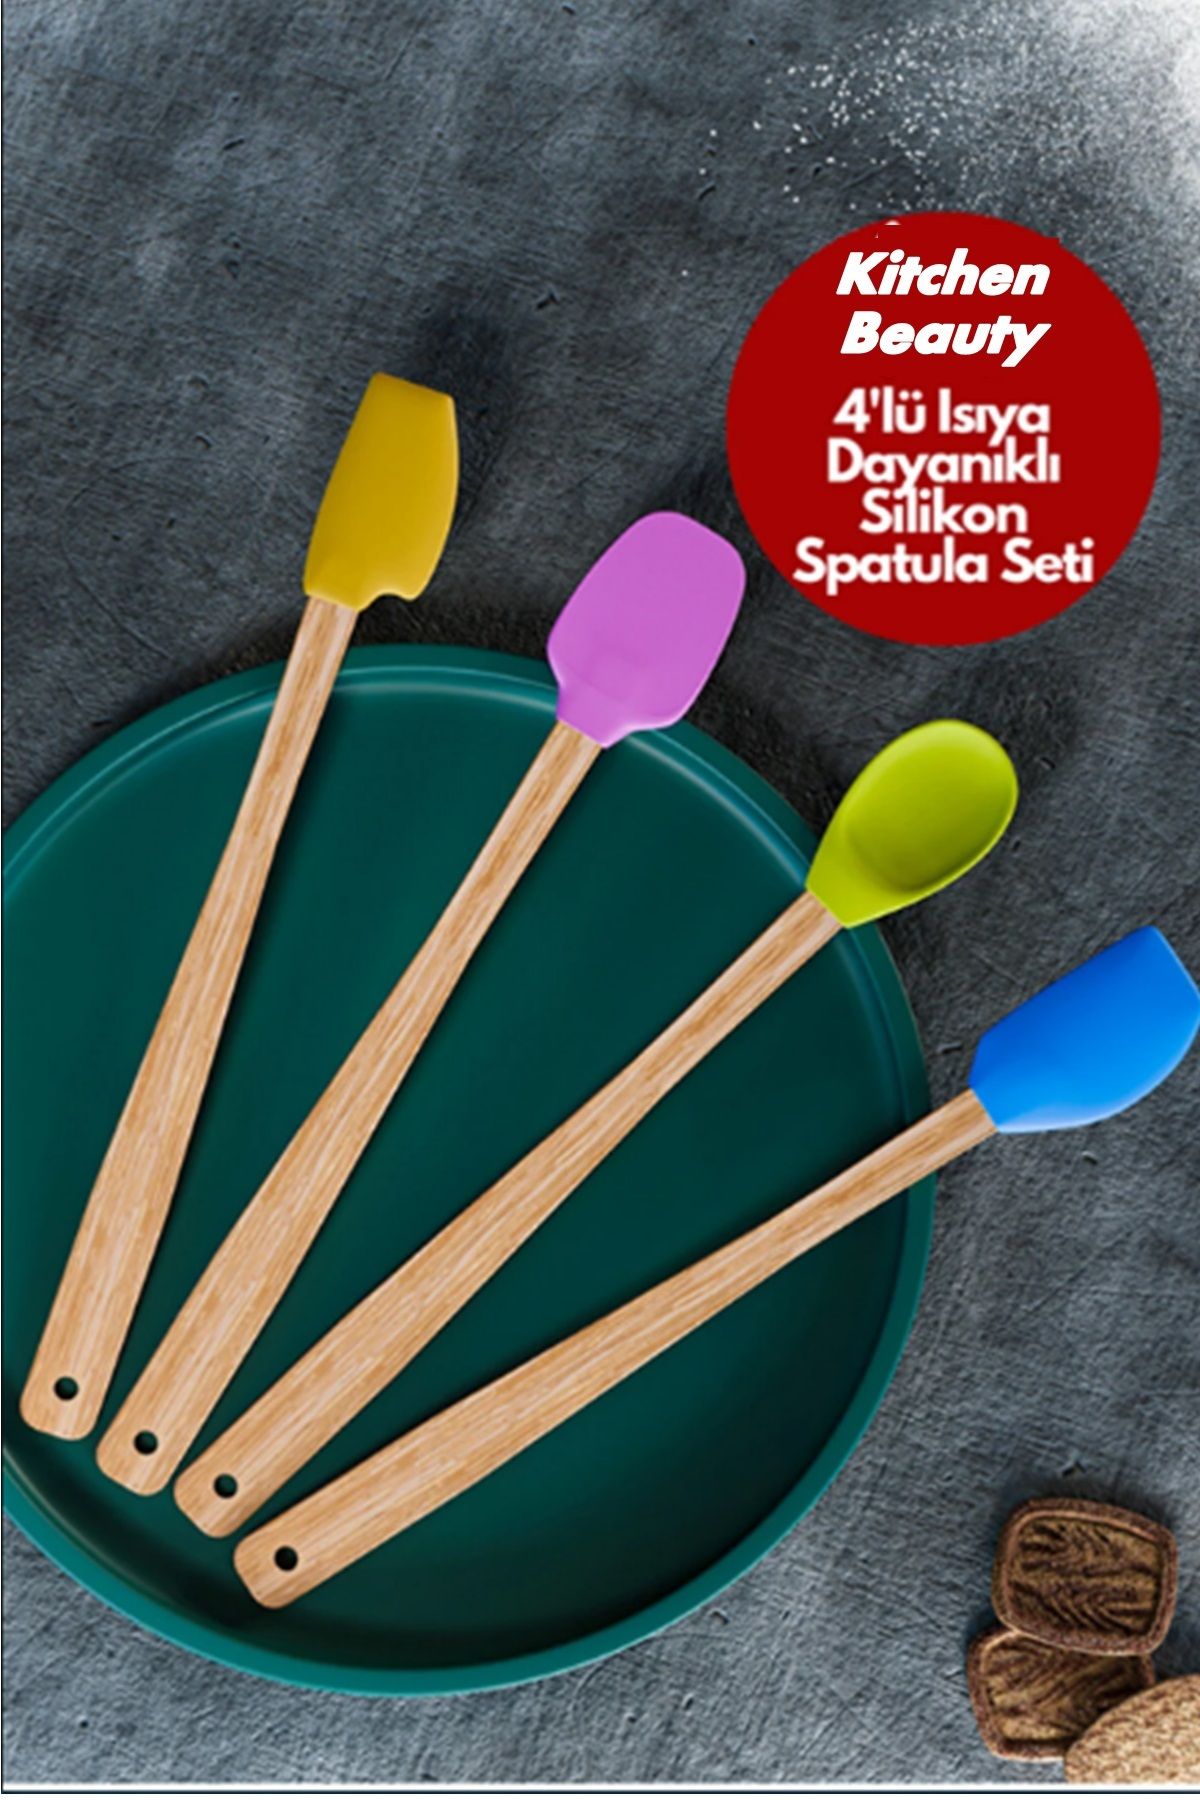 Kitchen Beauty 4'lü Isıya Dayanıklı Silikon Spatula Seti Silikon Mutfak Seti Renkli Kaşık Spatula Seti